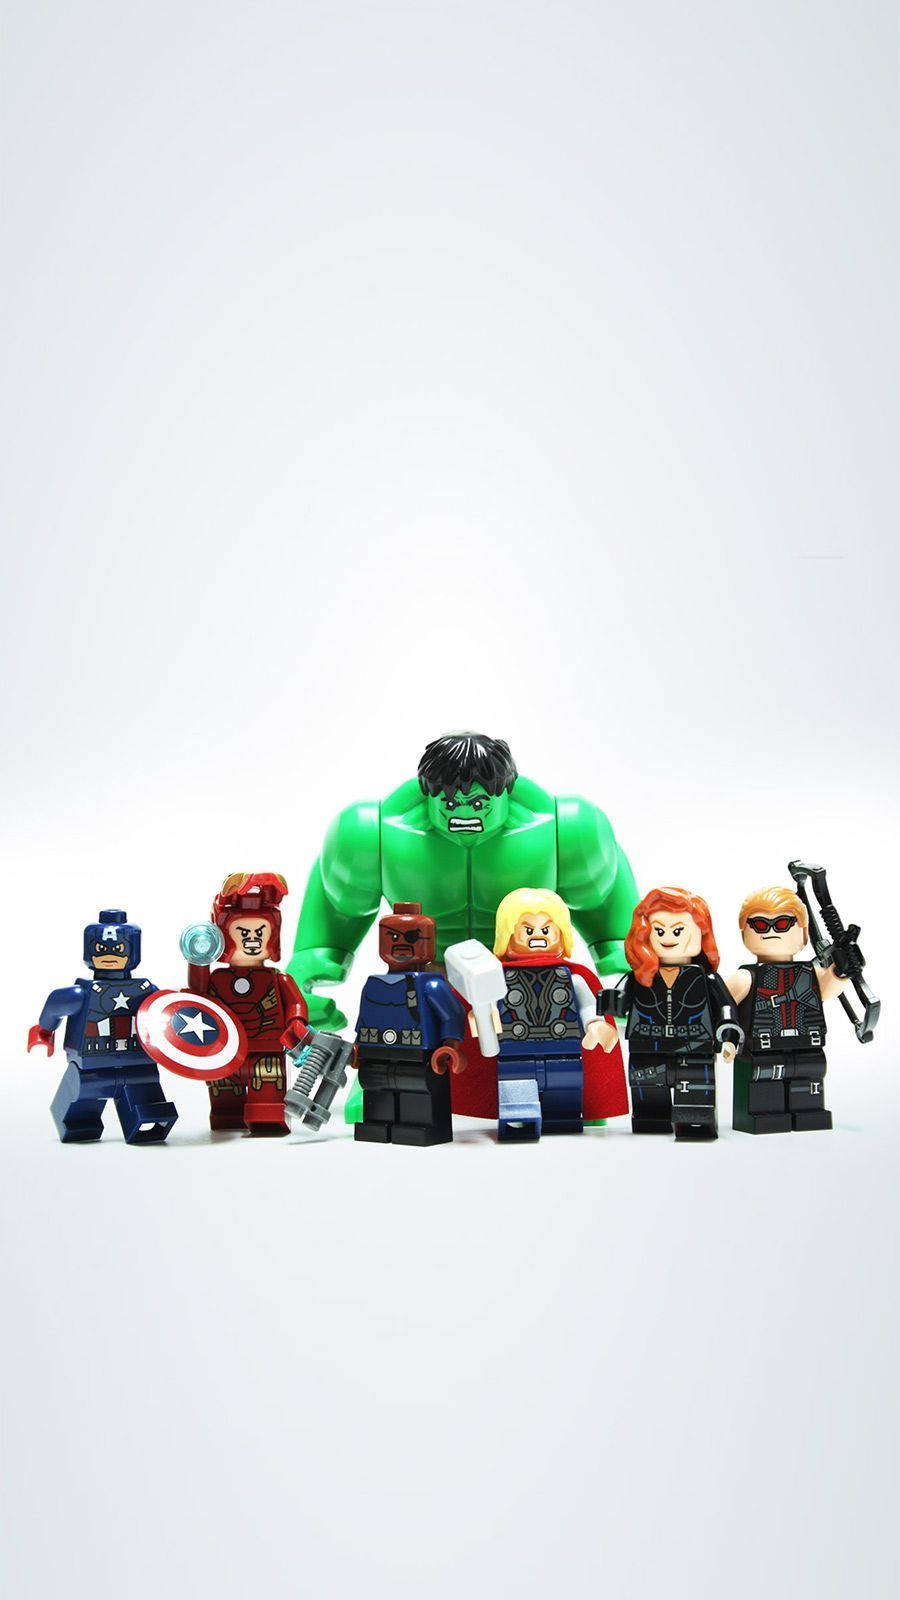 Sötafigurines Avengers Iphone X. Wallpaper